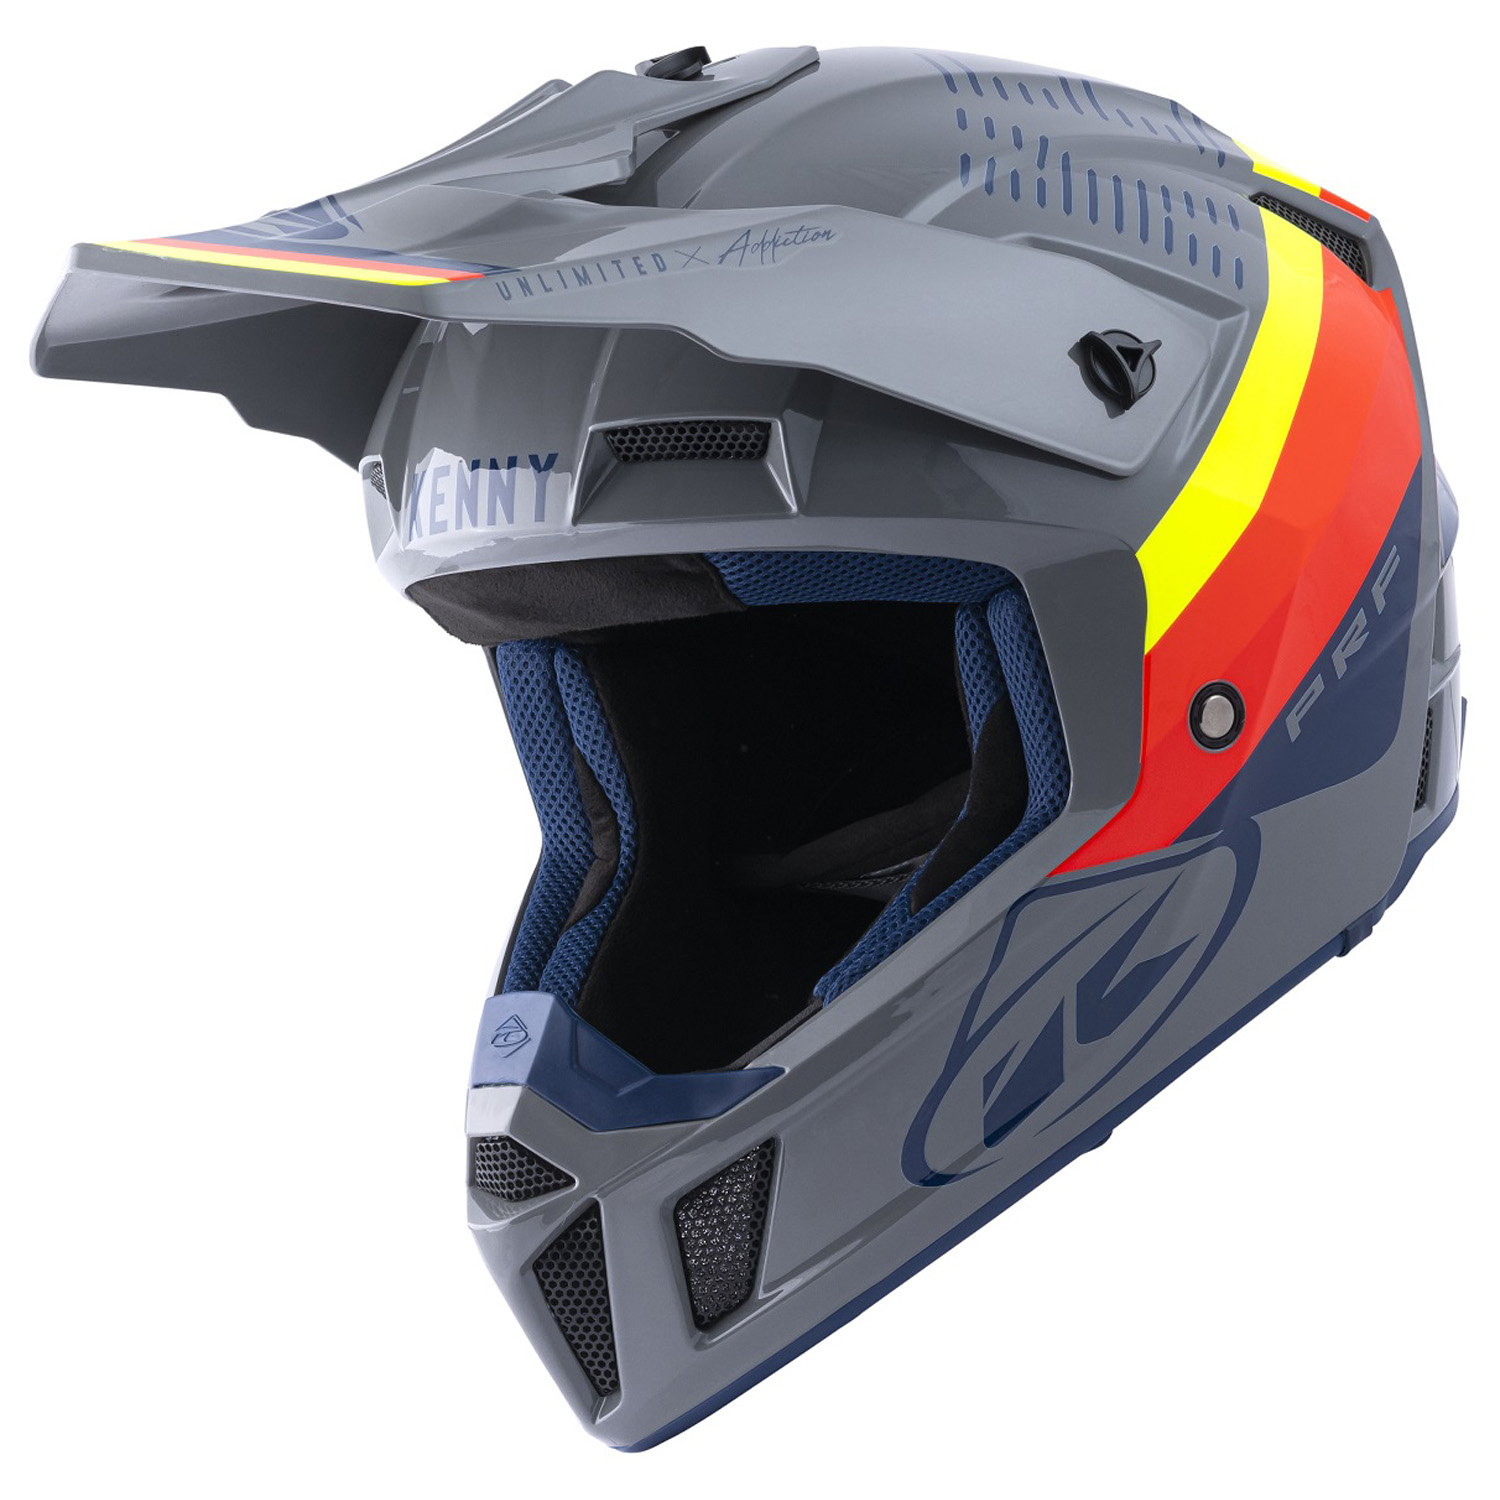 Kenny Racing Performance Helmet Grey - Sixstar Racing